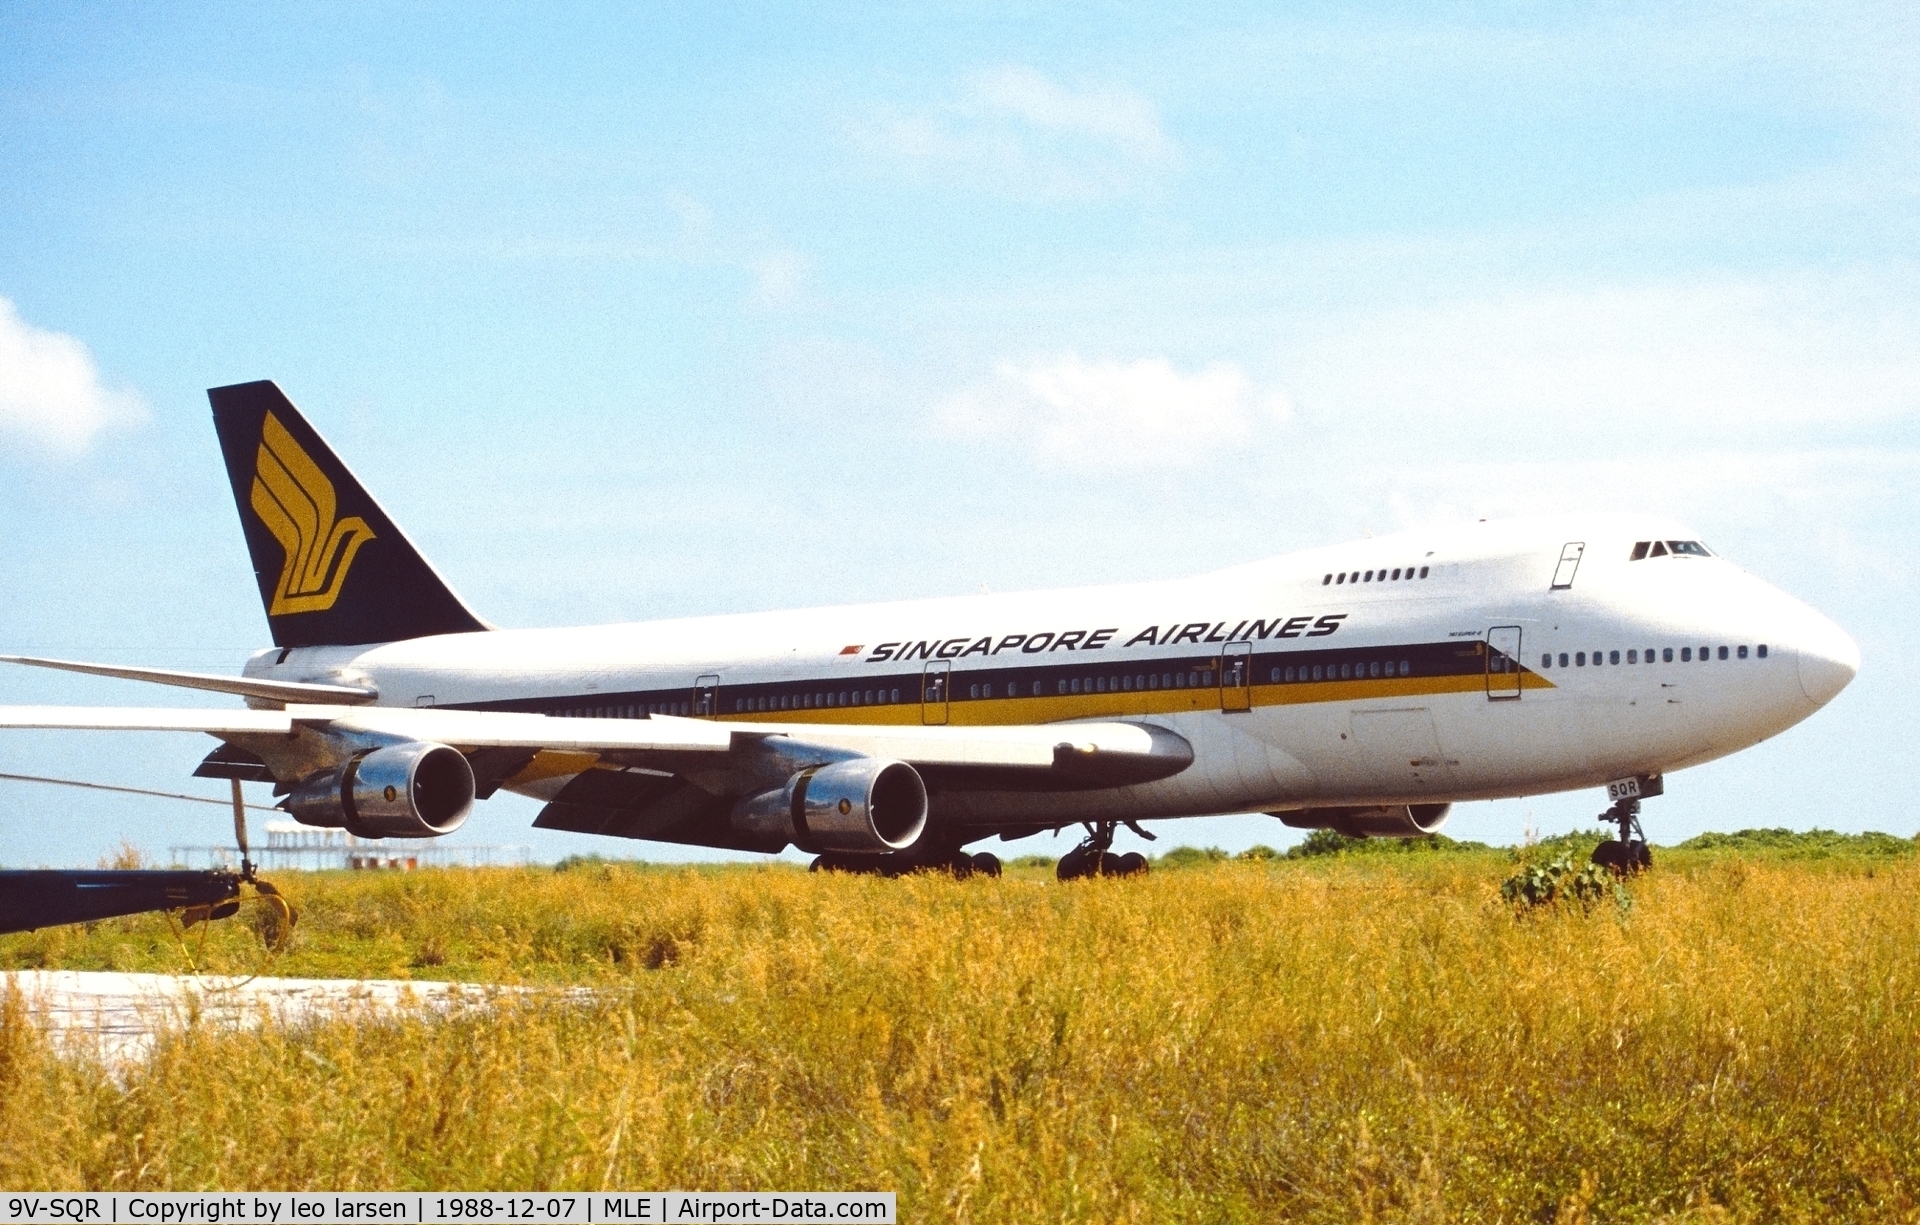 9V-SQR, 1980 Boeing 747-212B C/N 21943, Male 7.12.88